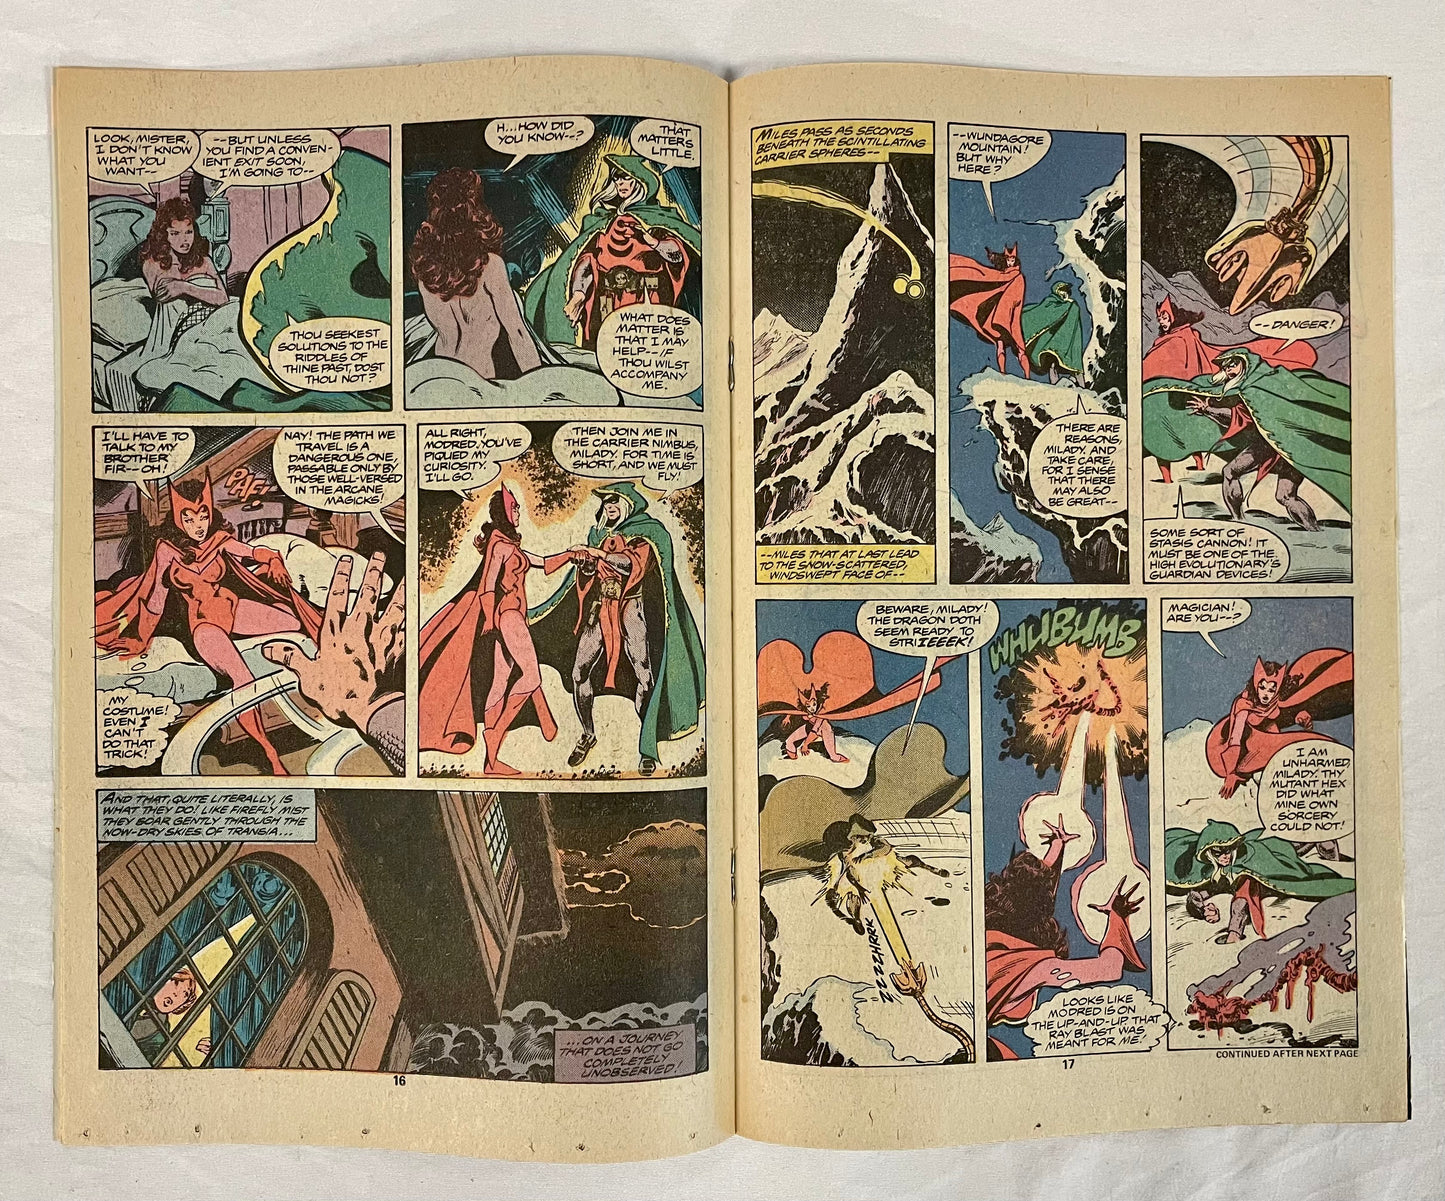 Marvel Comics The Avengers #185